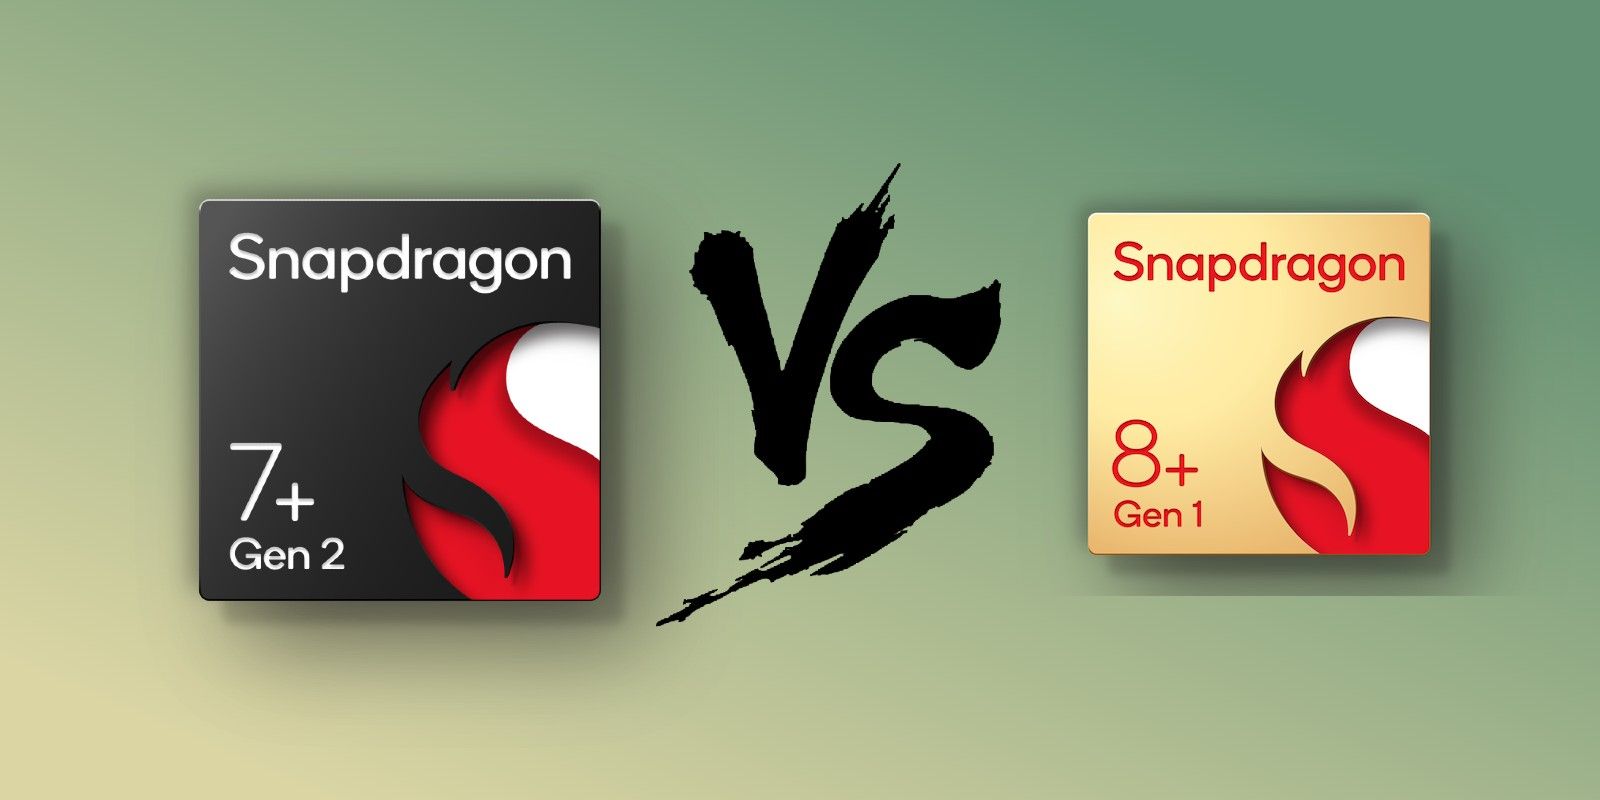 Chips de batalla: Snapdragon 7+ Gen 2 vs Snapdragon 8+ Gen 1